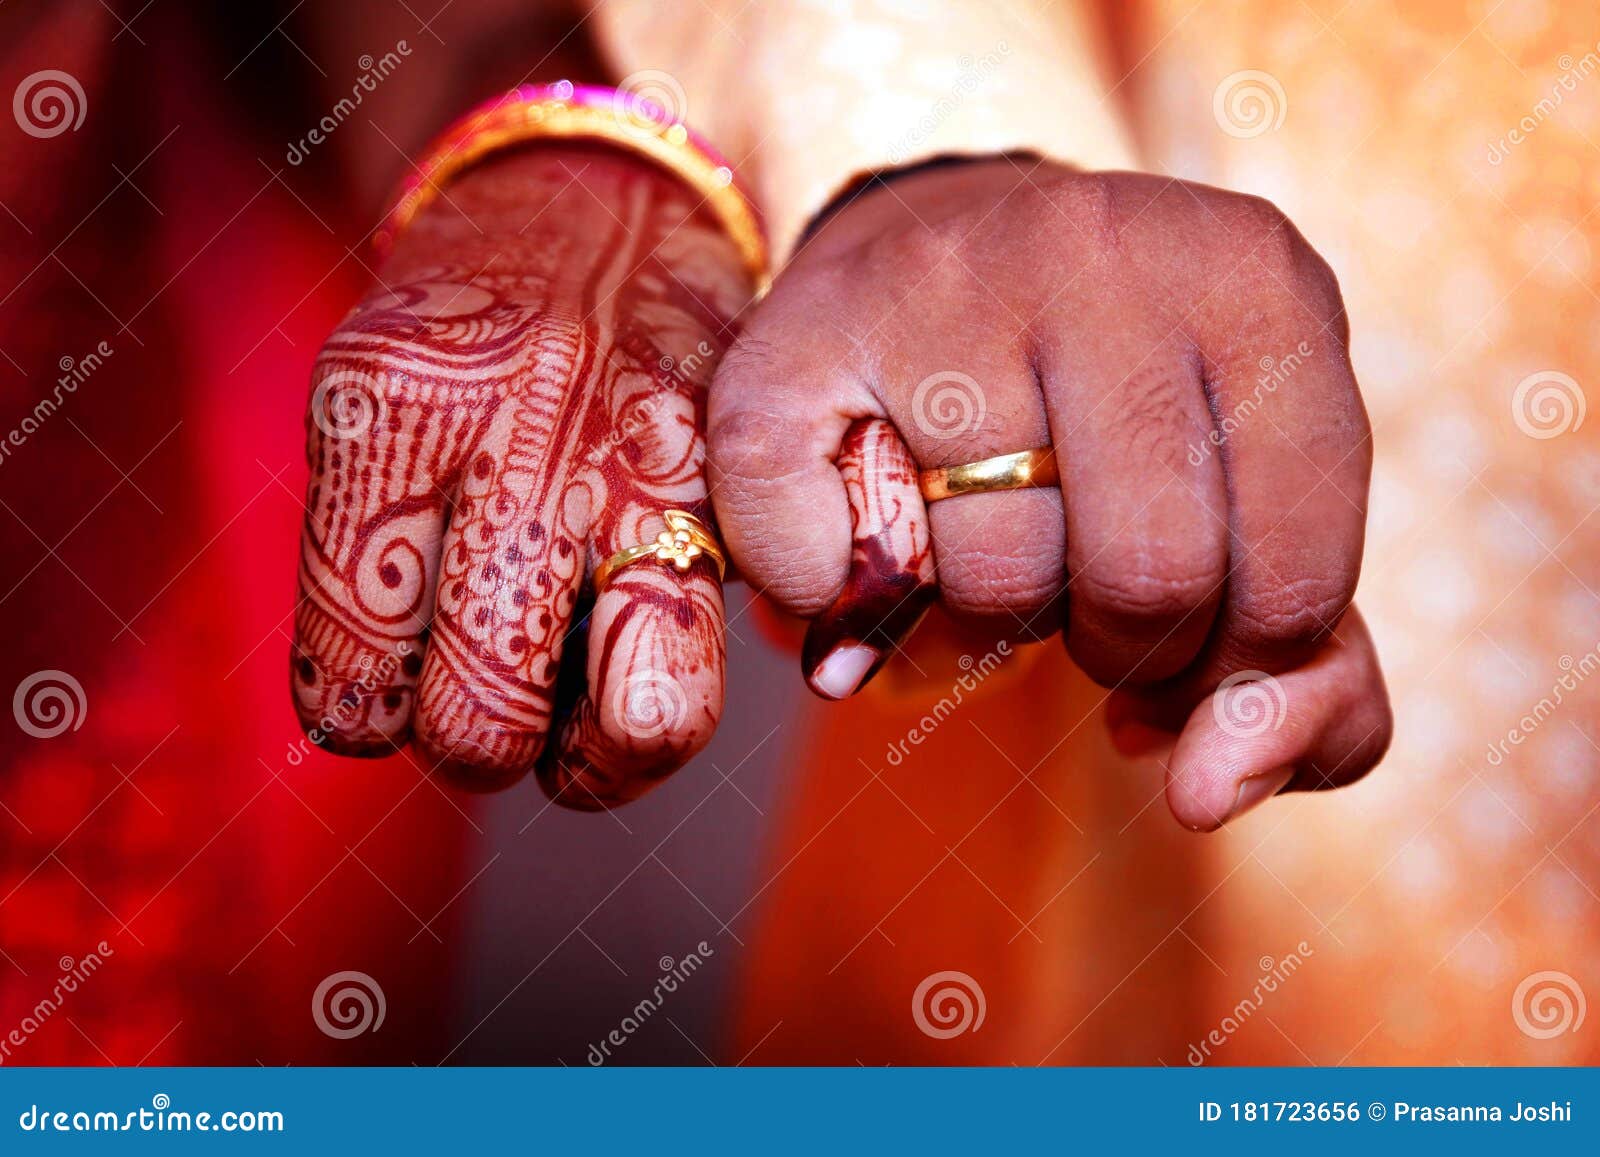 30k+ Wedding Hand Pictures | Download Free Images on Unsplash